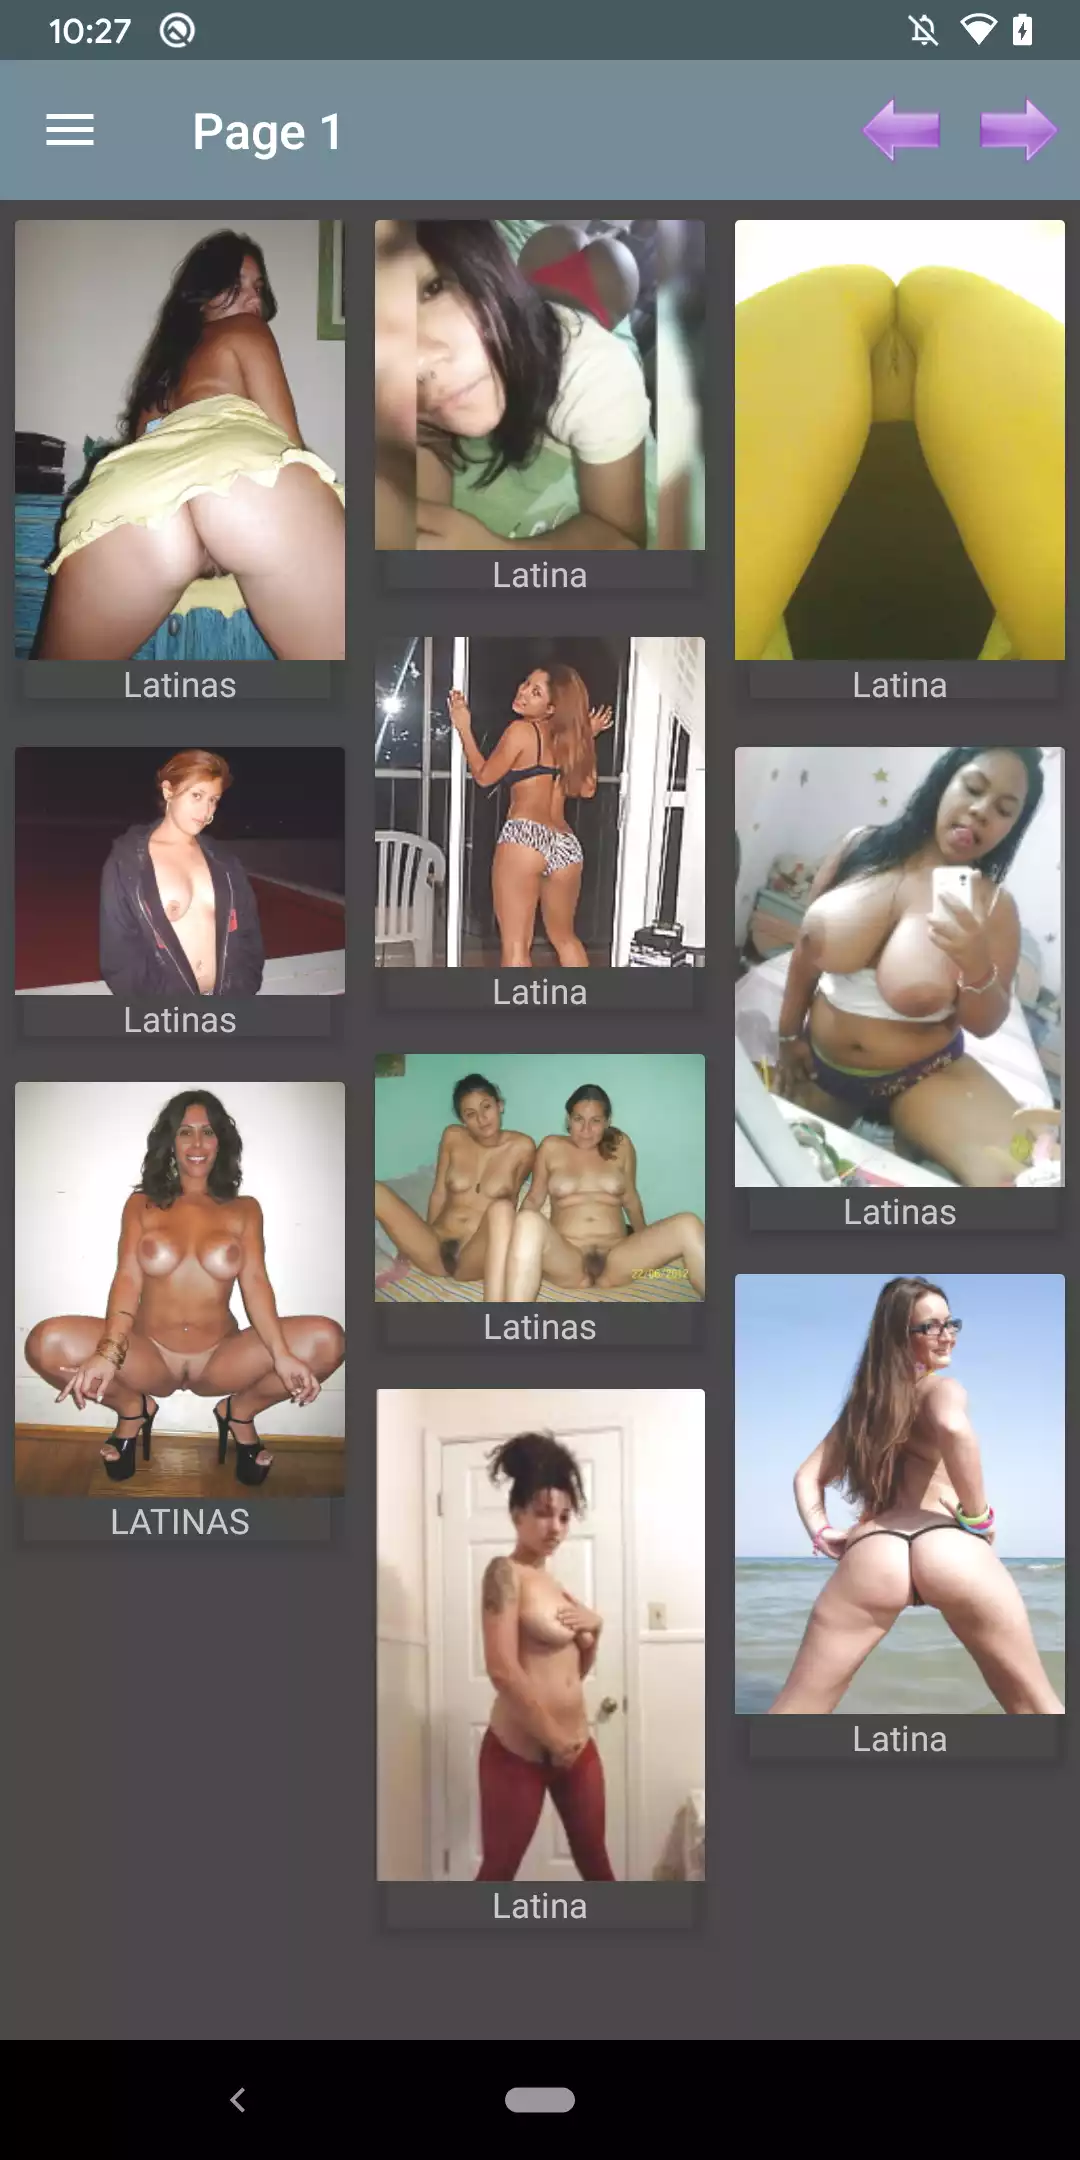 Latina Pics wallpaper,pornostar,ebony,apps,banxxx,pic,hentai,gallery,brasil,free,nyomi,erotic,pornstars,apk,pornstar,sexy,photo,mexican,anime,galleries,wallpapers,latina,app,hot,pictures,dance,porn,android